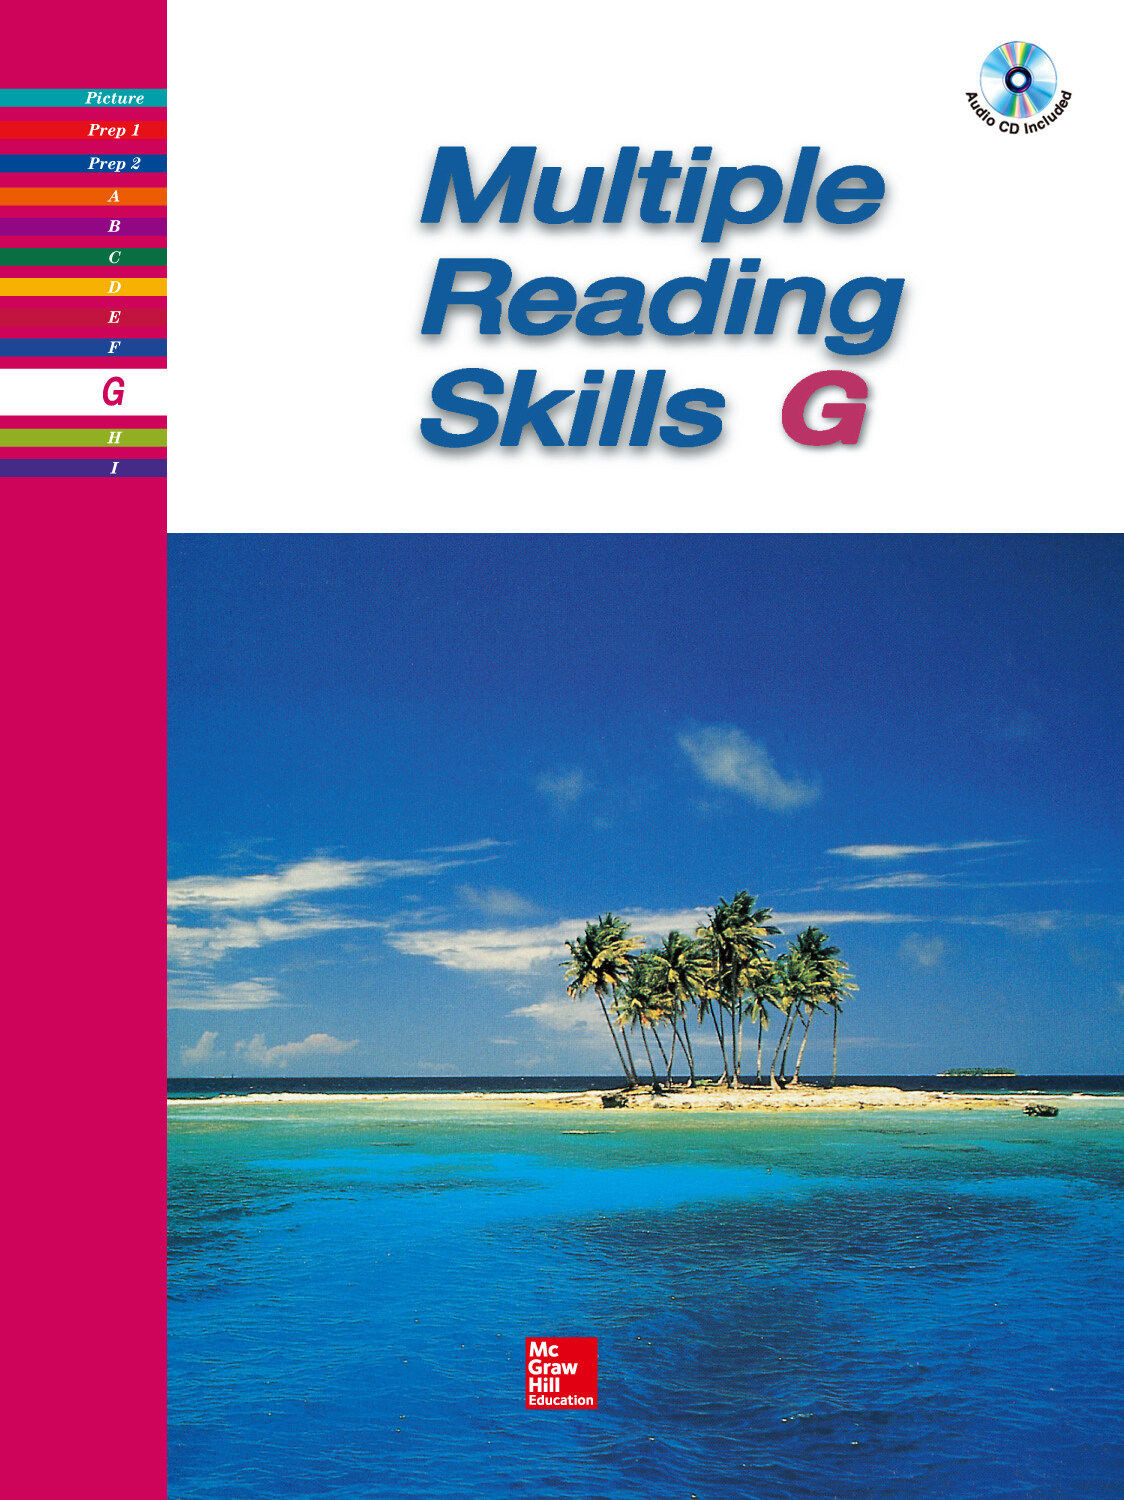 New Multiple Reading Skills G (Paperback + CD 1장, New Edition)